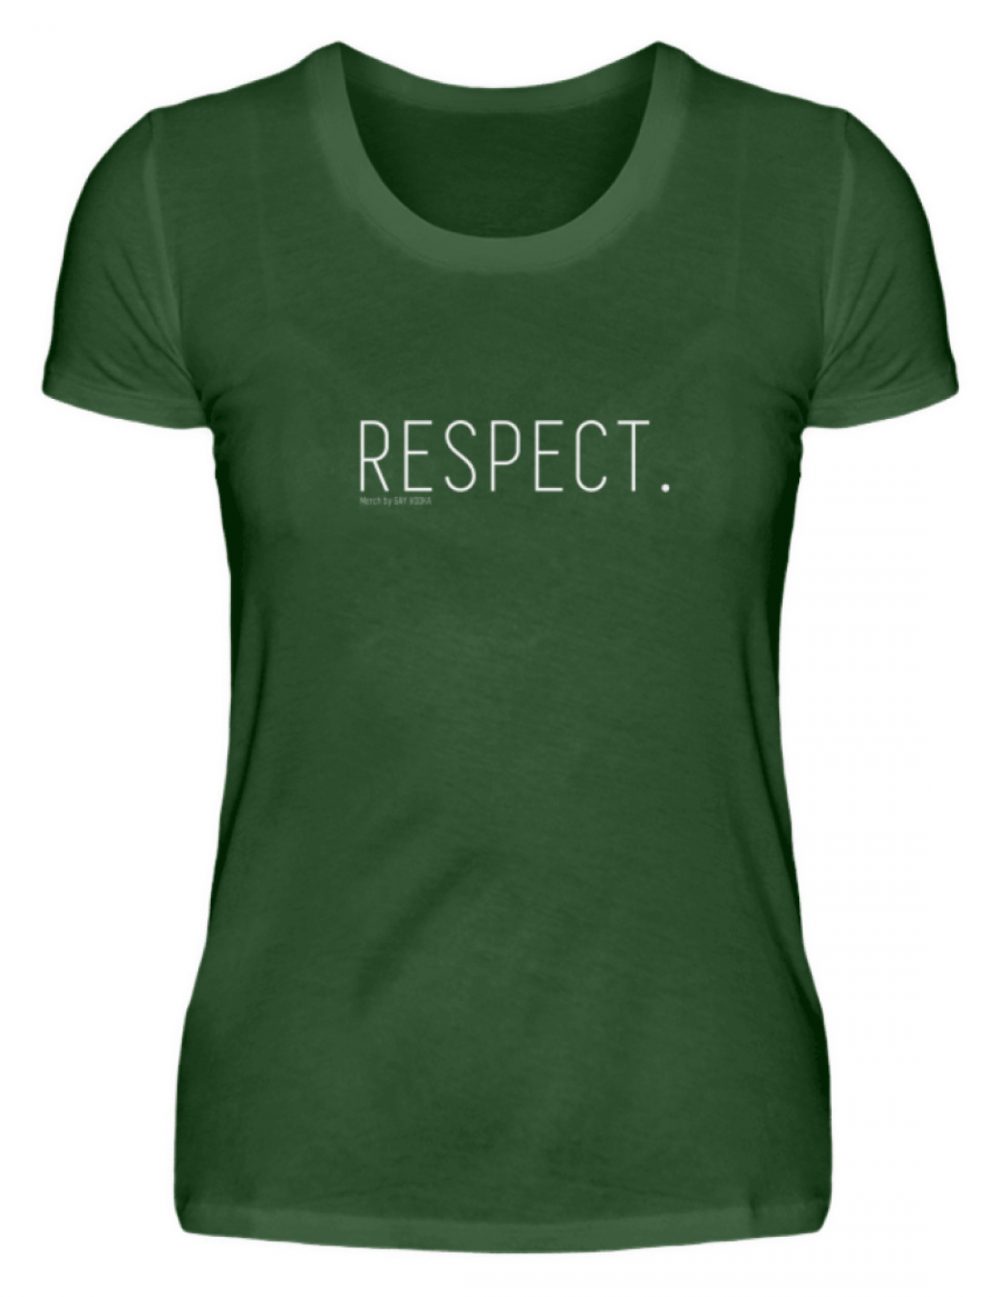 RESPECT. - Damen Premiumshirt-2936